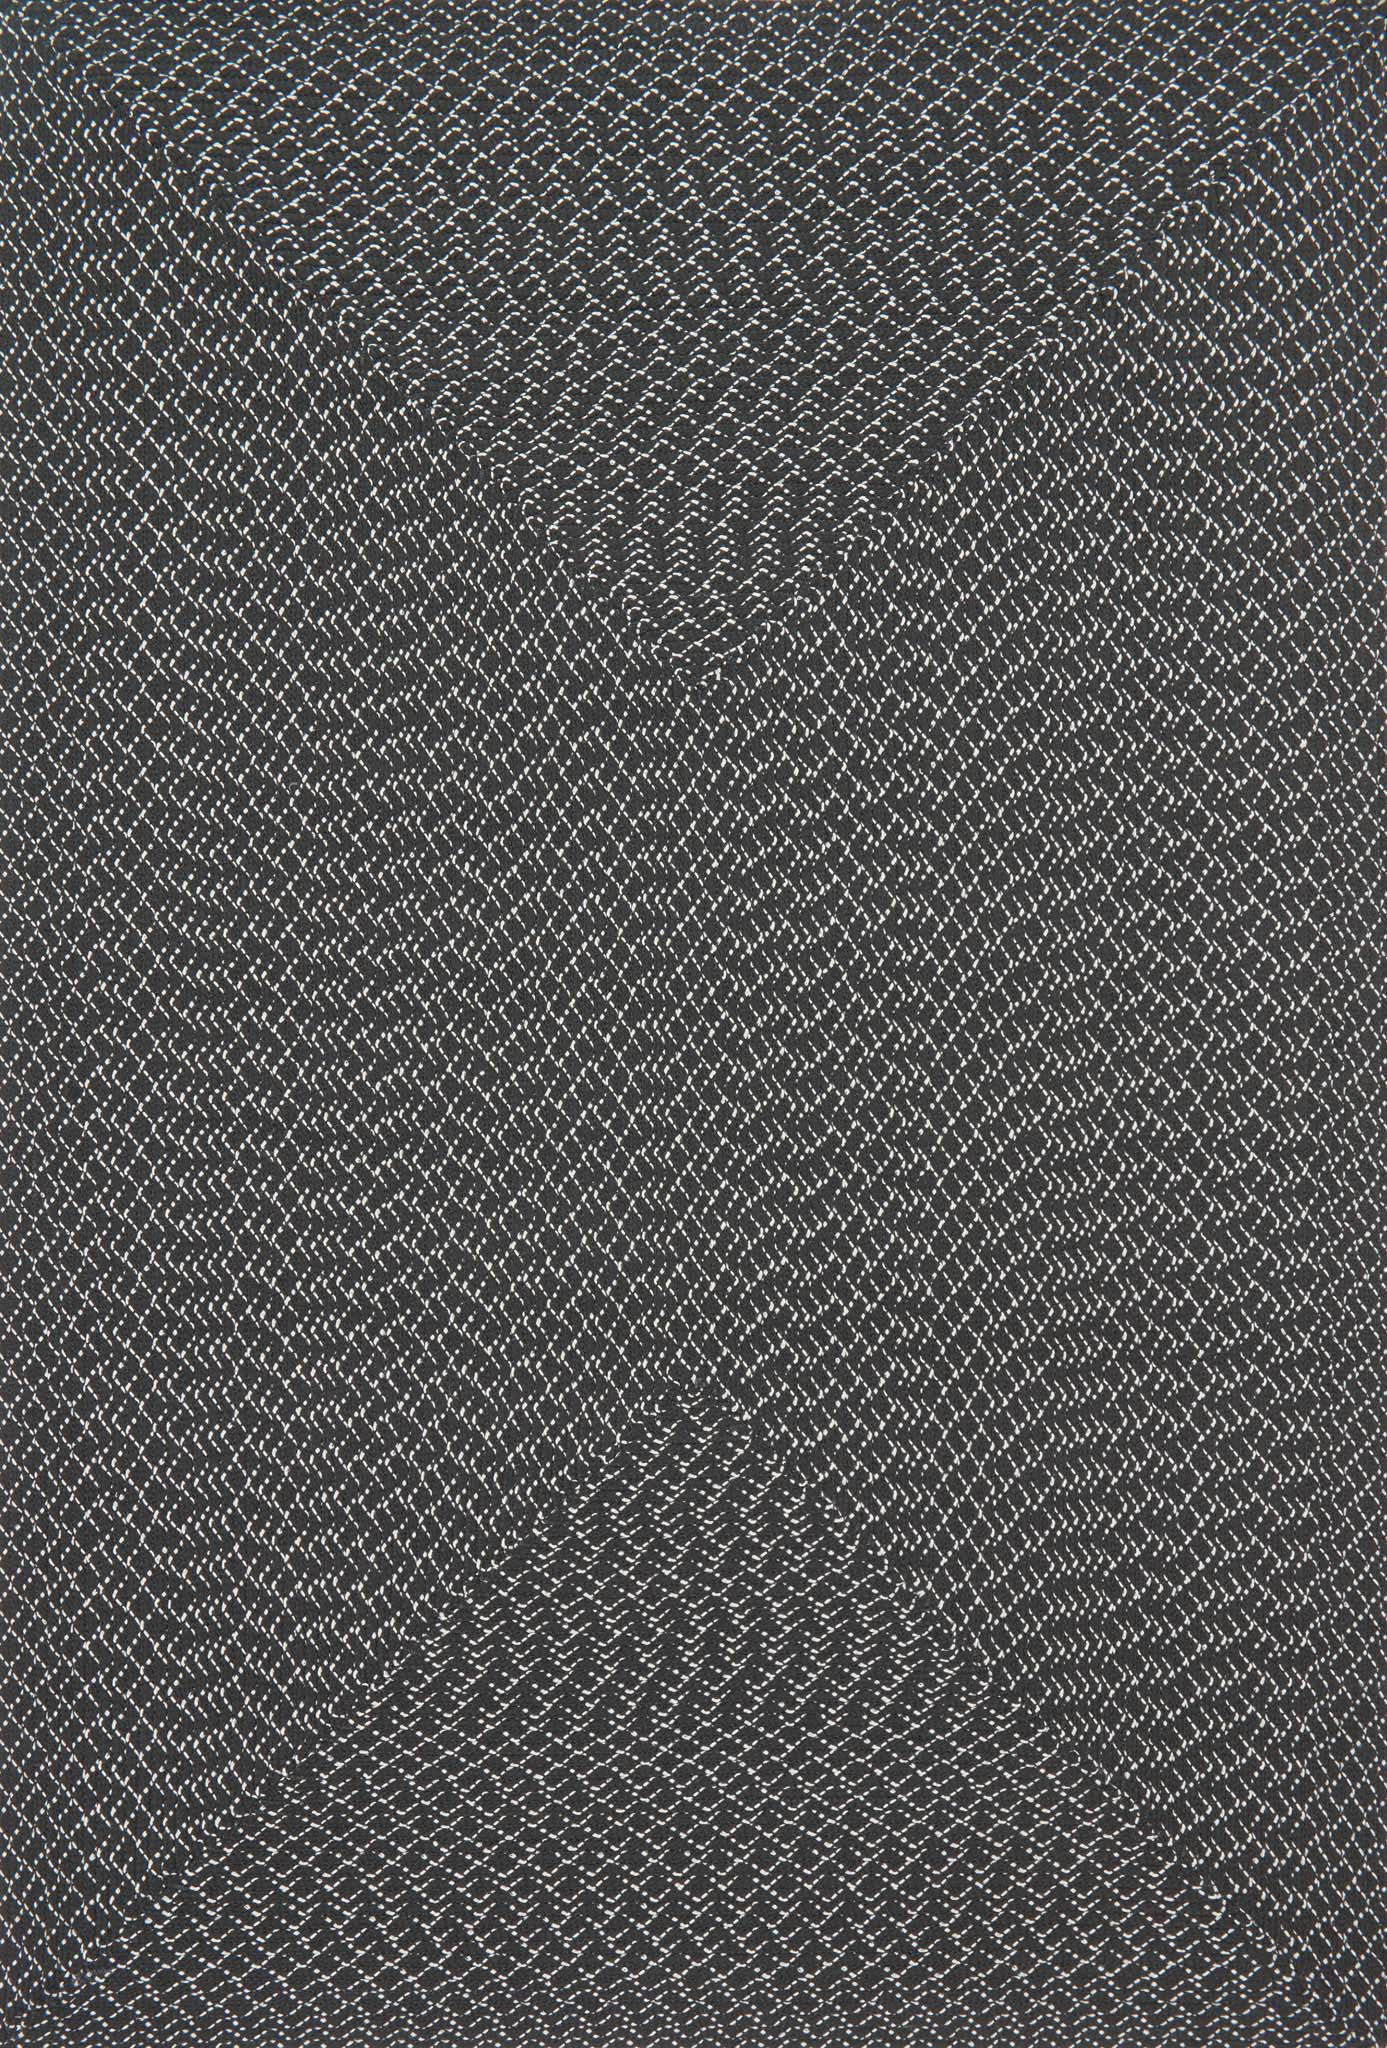 Loloi Wylie WB-01 Charcoal Area Rug main image